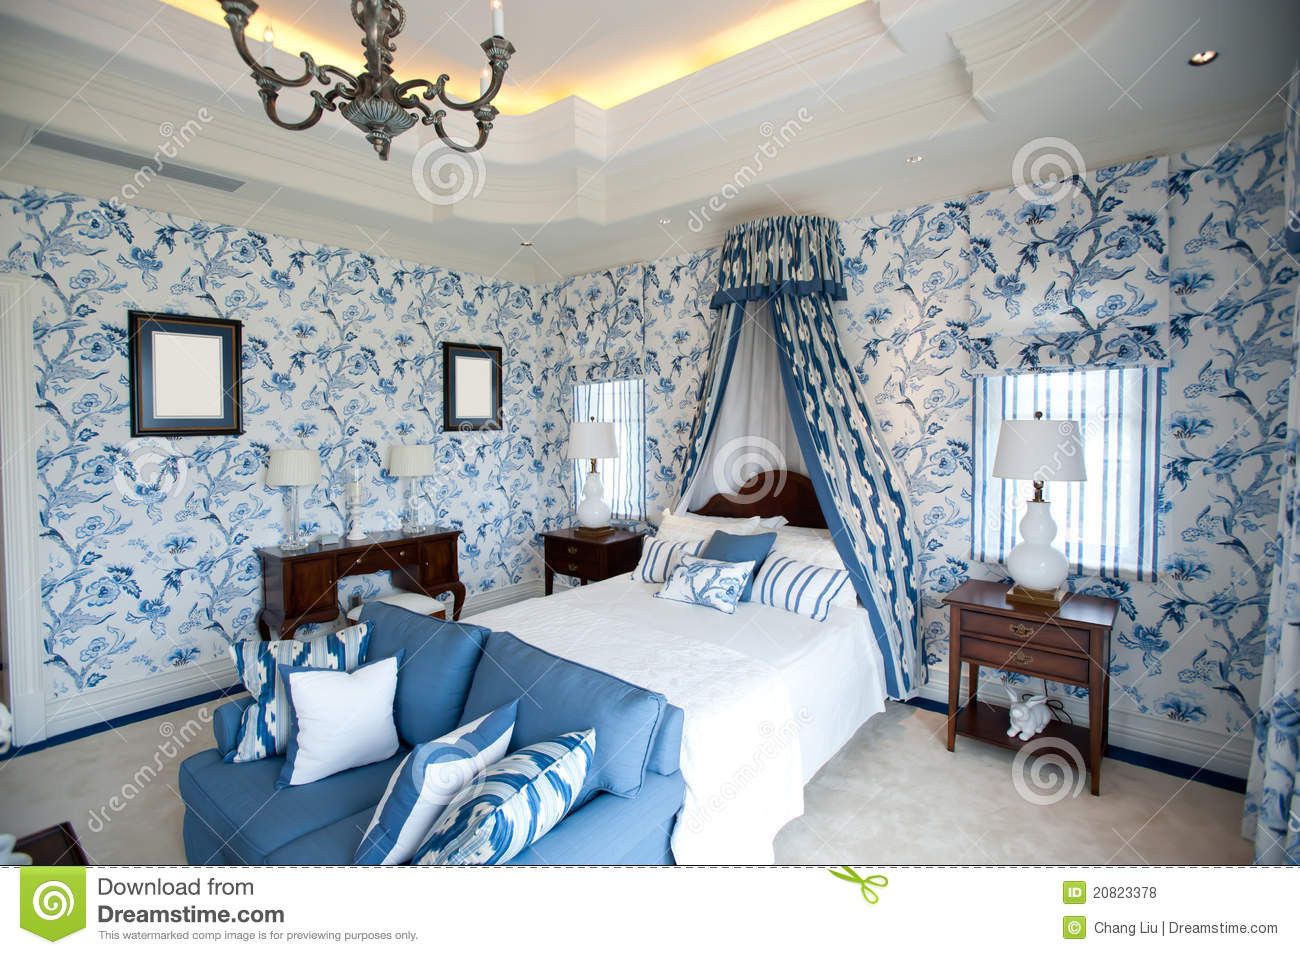 Flower Bedroom Wallpaper
 Bedroom With Blue Flower Wallpaper Royalty Free Stock